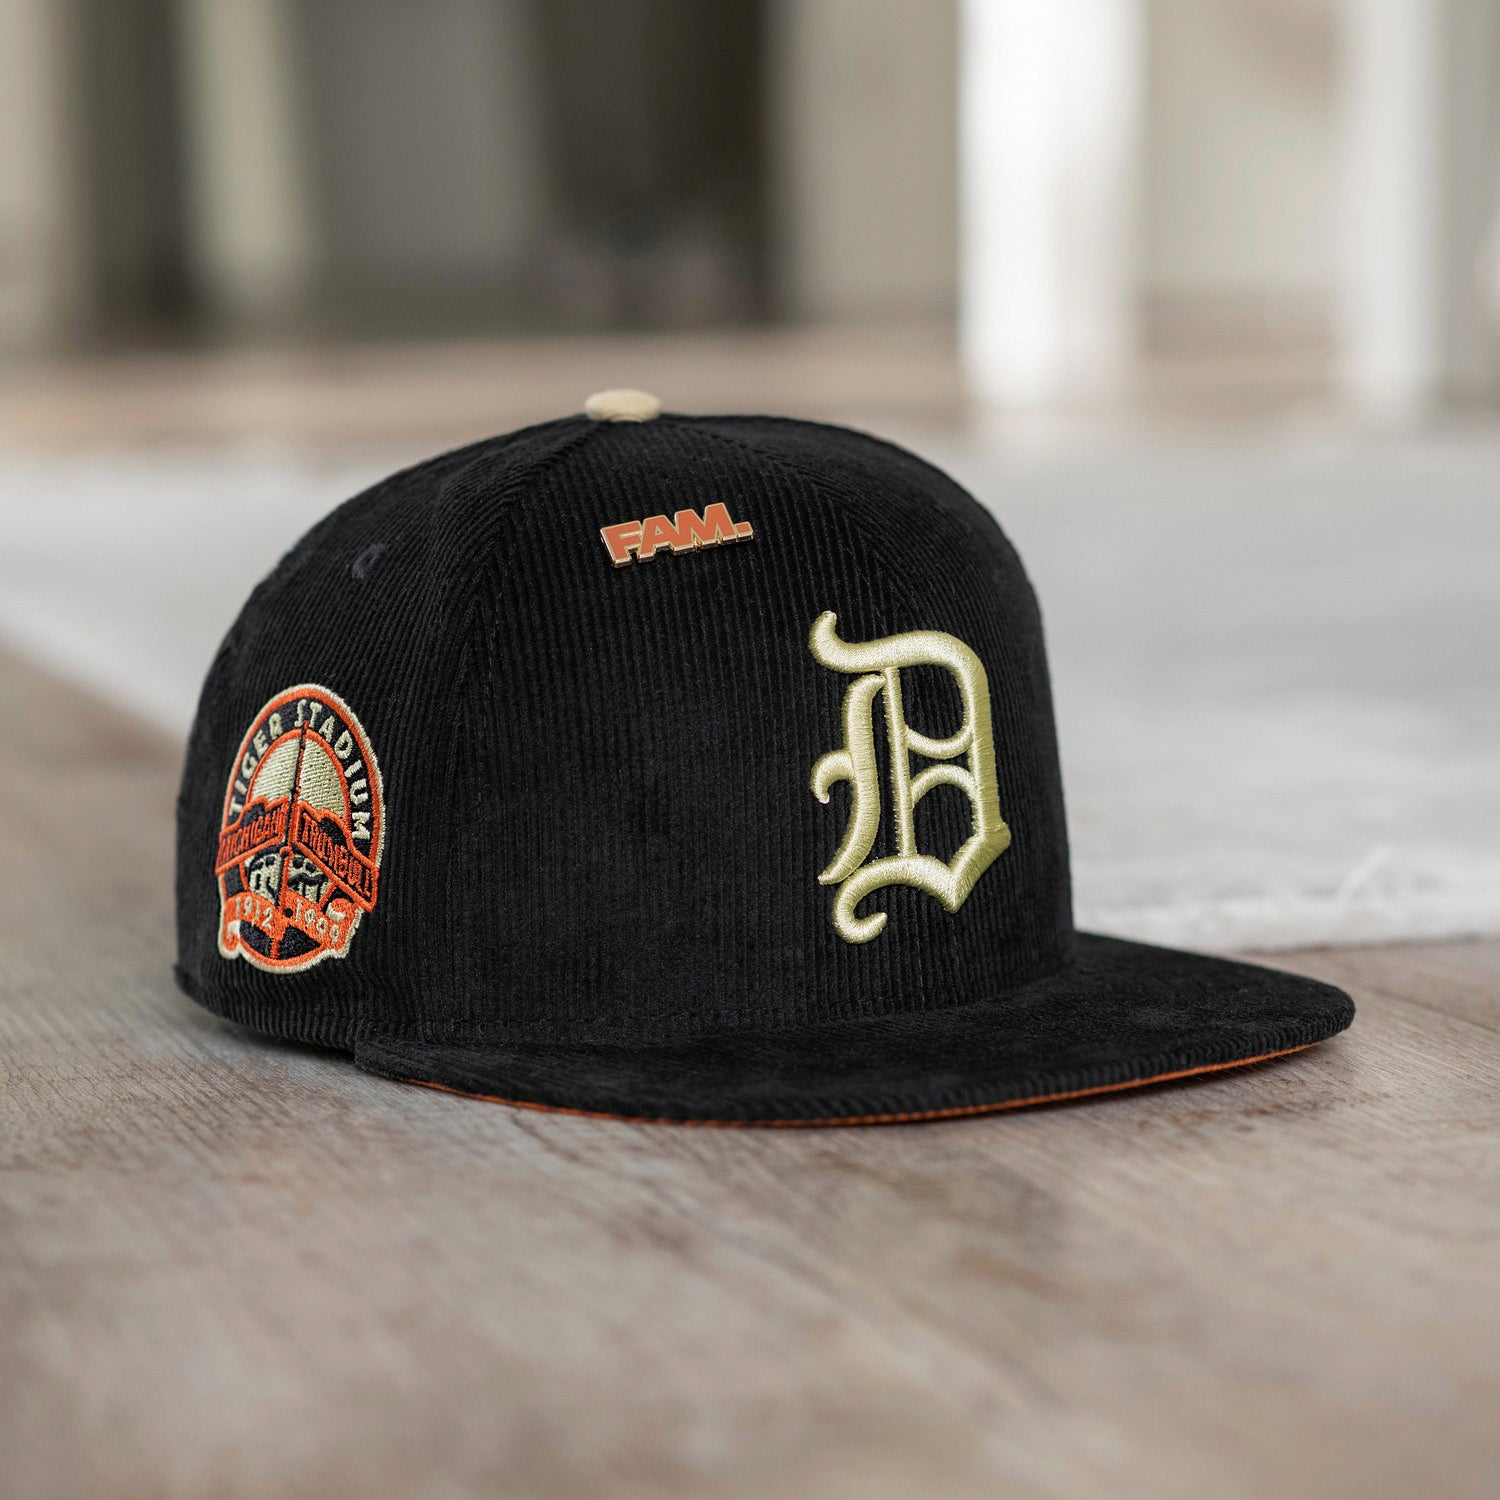 NEW ERA 59FIFTY MLB DETROIT TIGERS 50TH ANNIVERSARY CORD BLACK / FIGHT ORANGE UV FITTED CAP